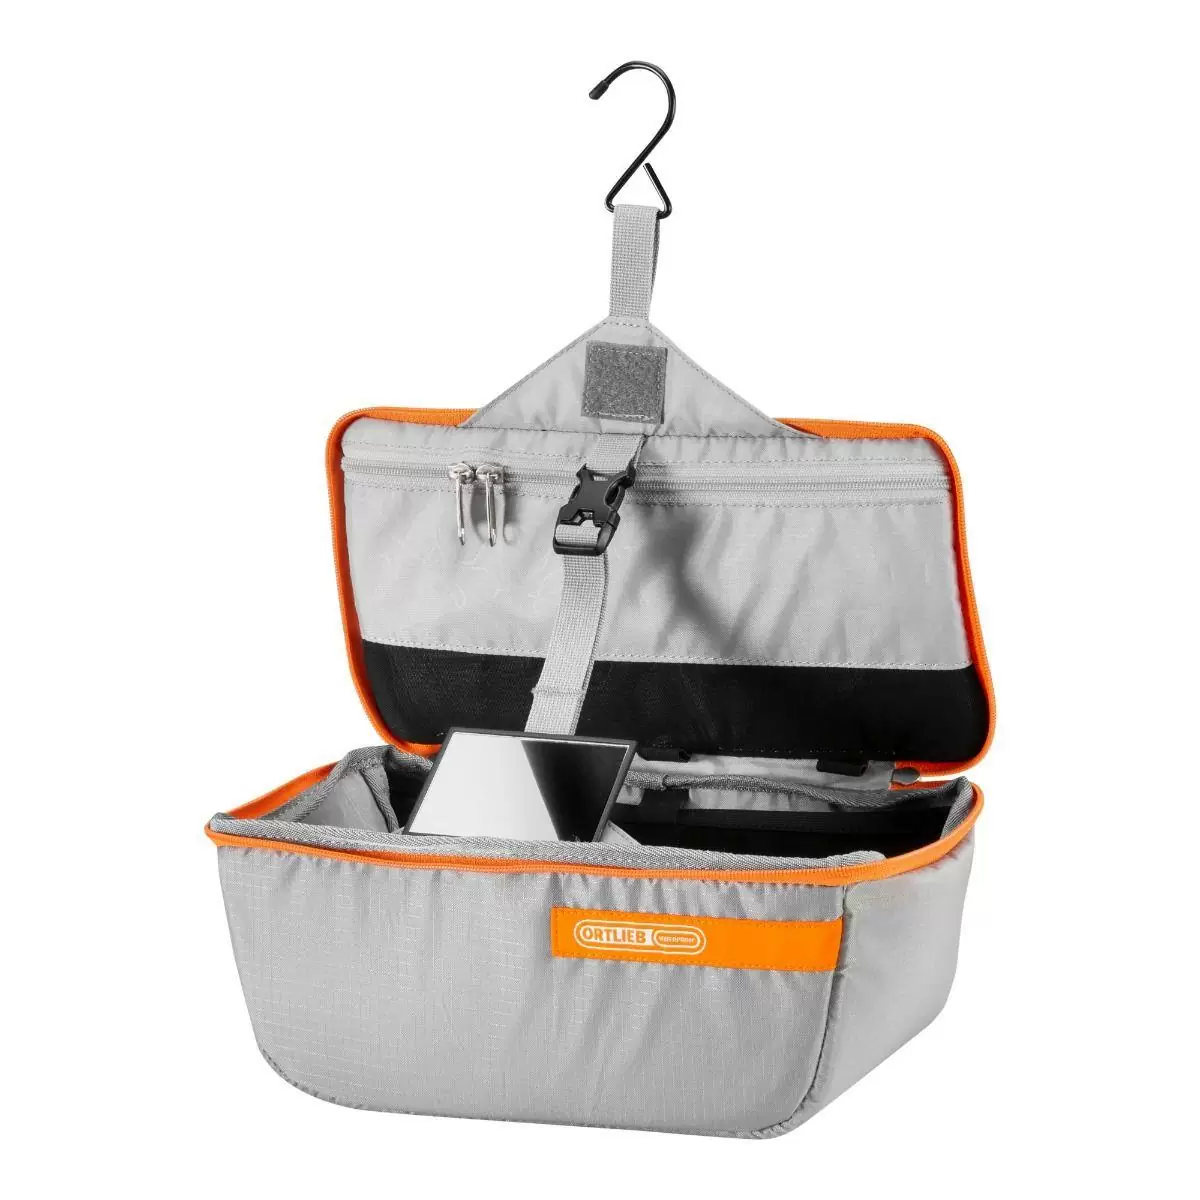 Organizer Universale Beauty Case Toiletry Bag 5L - image